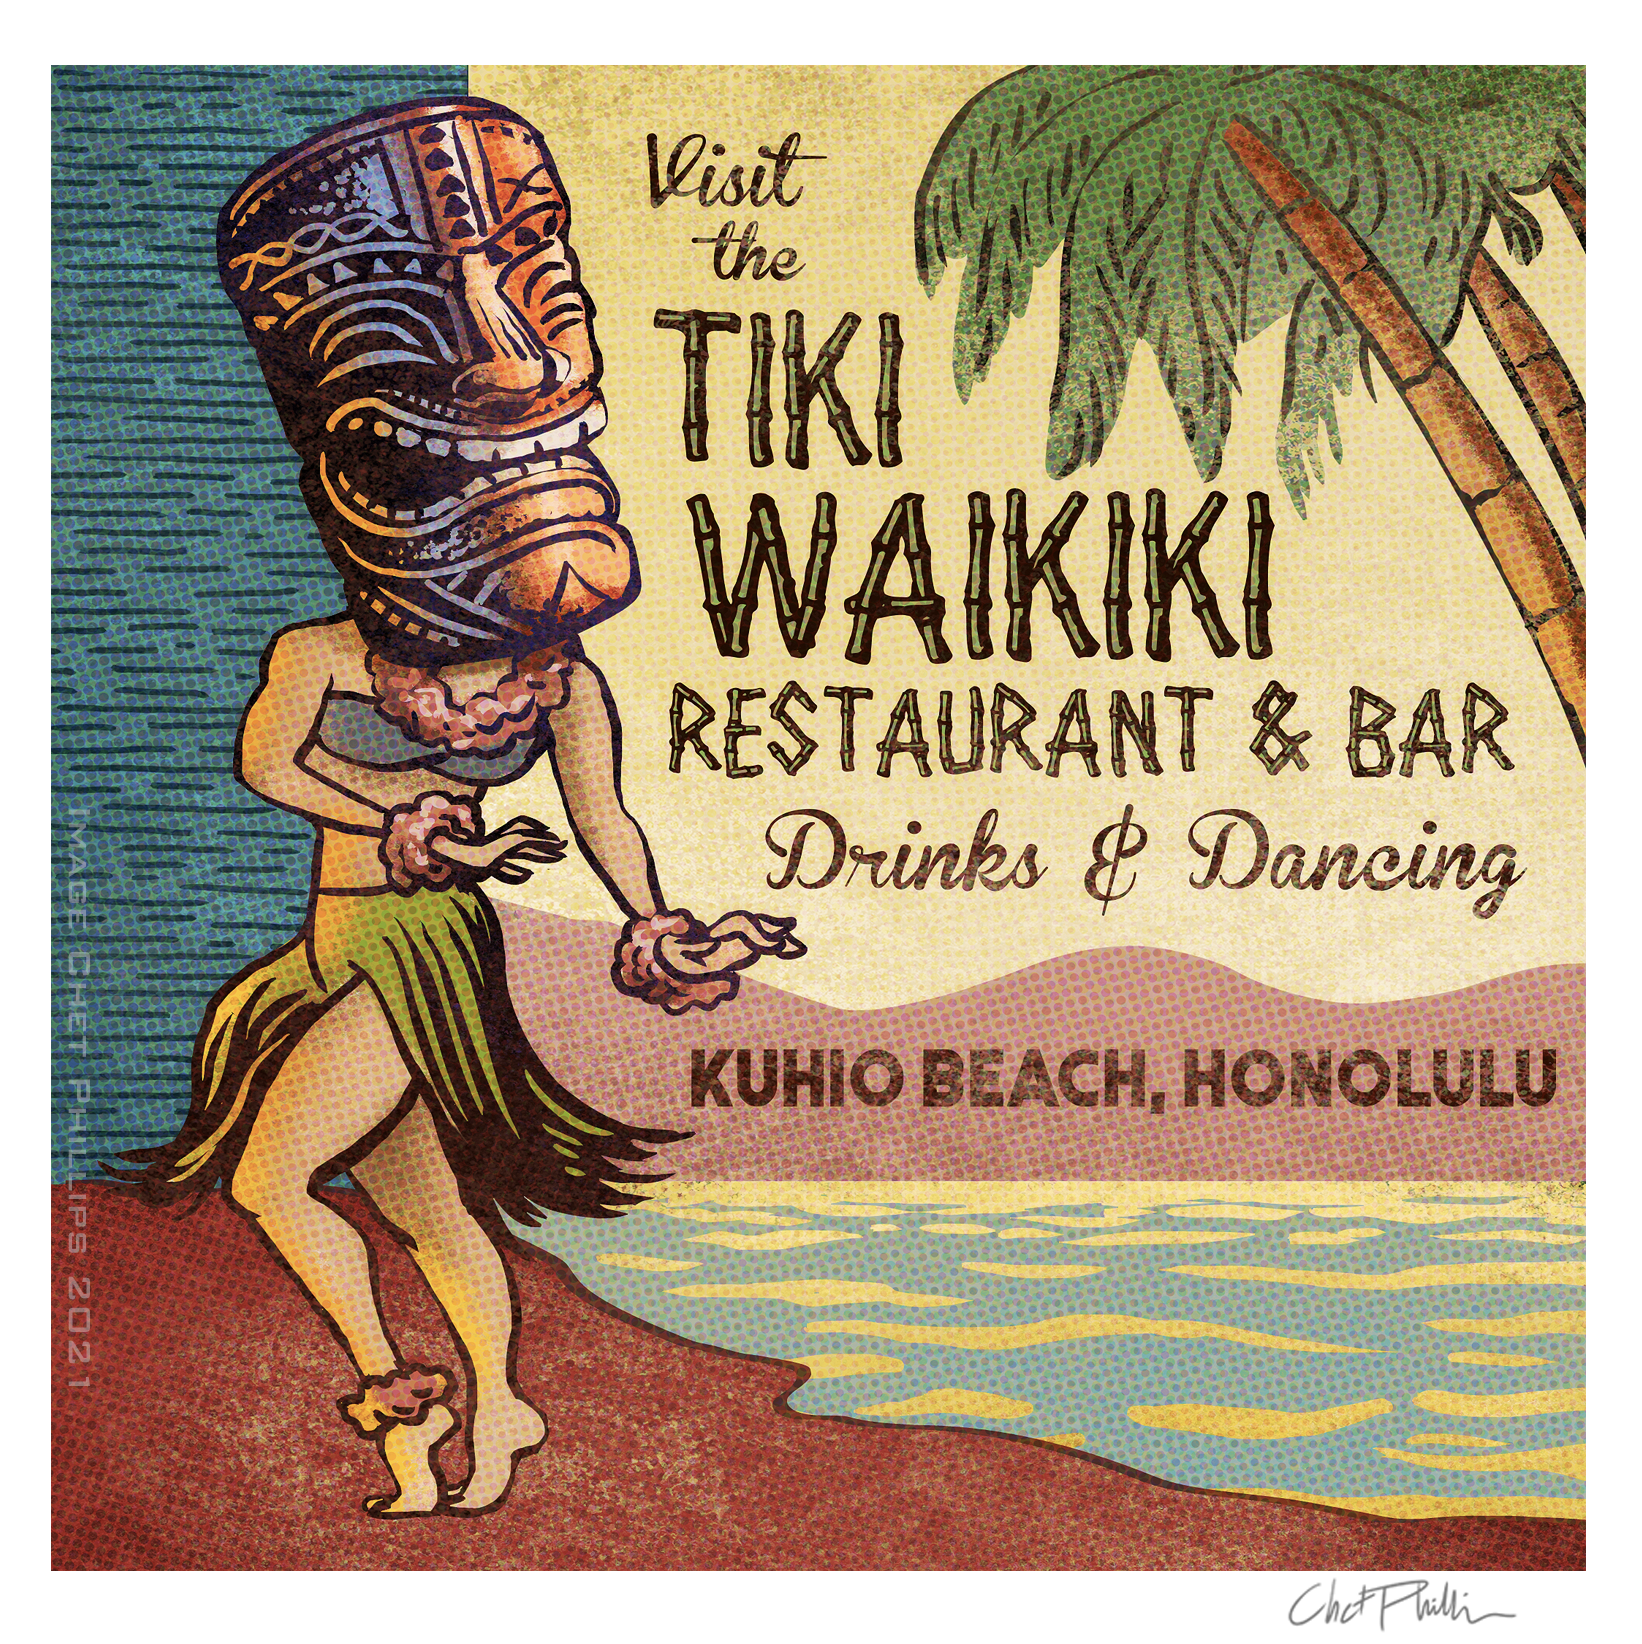 Tiki Waikiki Matchbook Art Print